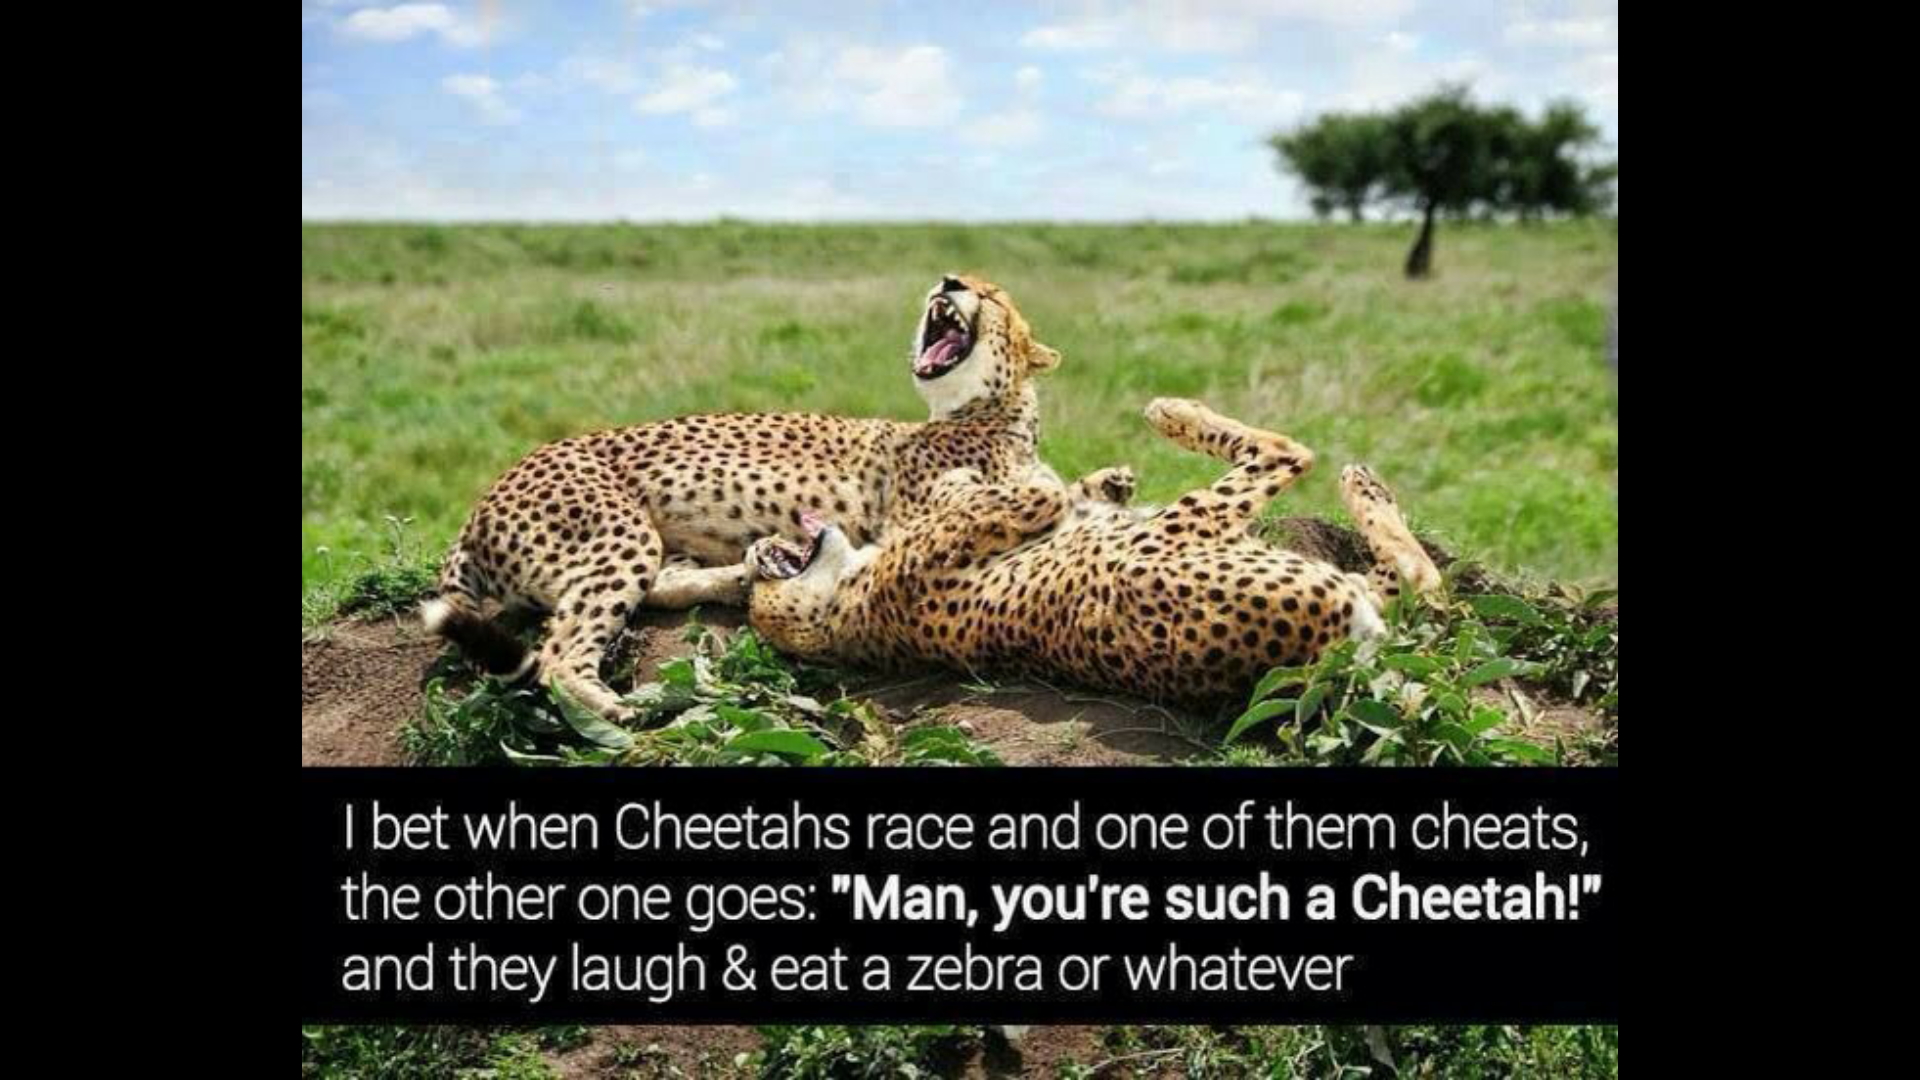 Don't cheetah on meh